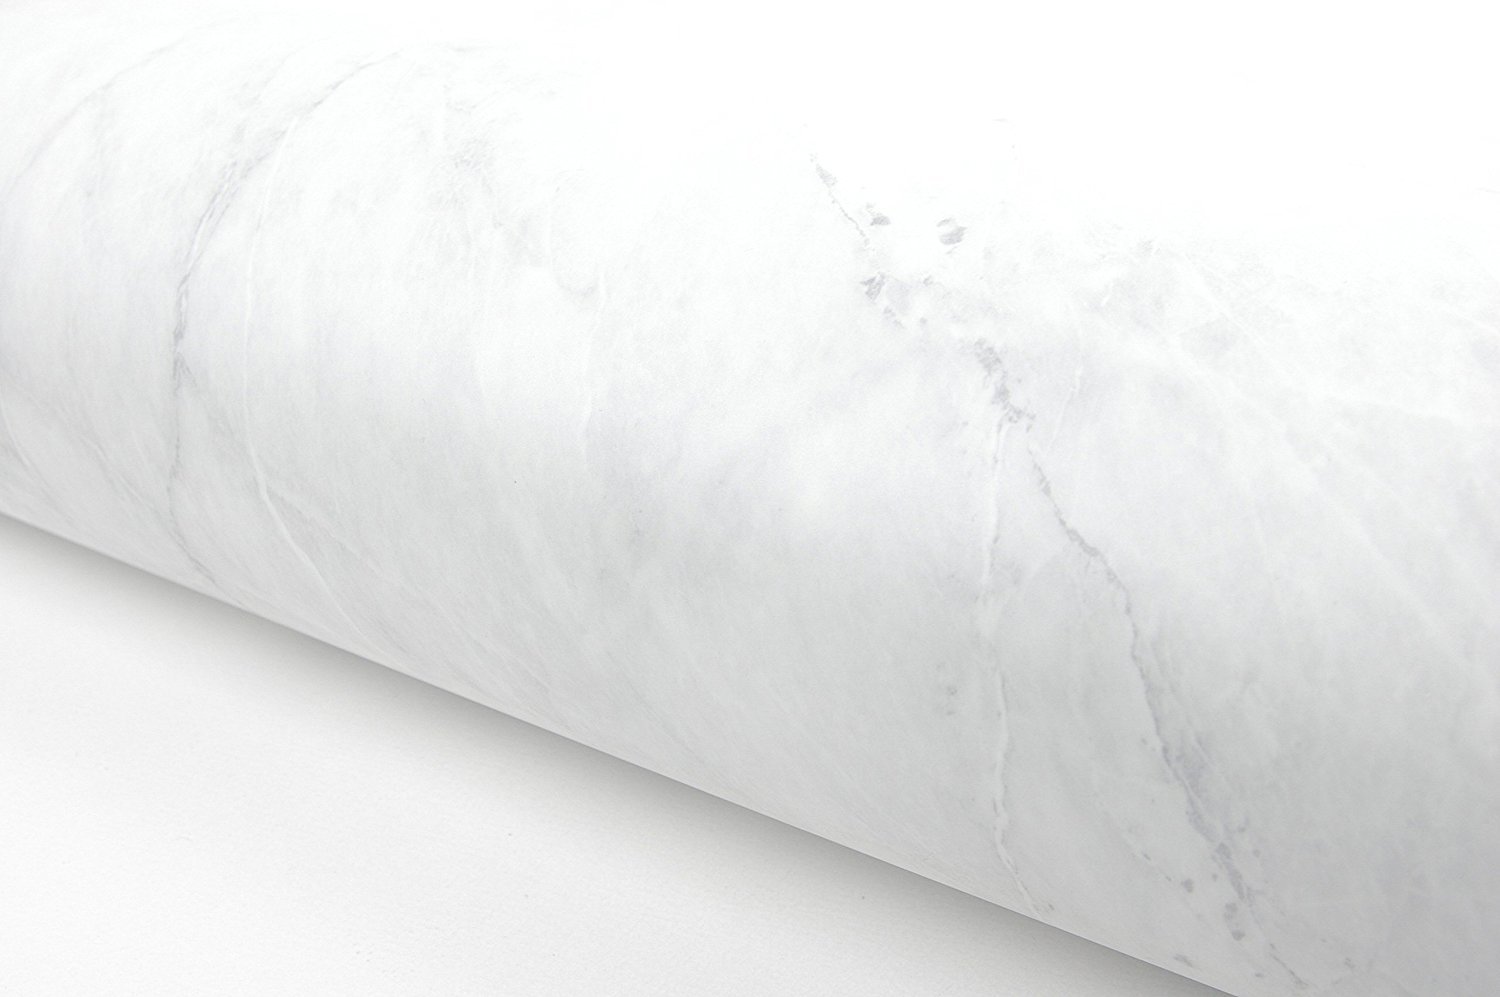 Granite Marble Self Adhesive Peel and Stick Mural Contact Wallpaper 61cm X 2M 24X78.7 0.23mm Waterproof PVC Vinyl Kitchen Bed Living Room Bathroom Shelf Drawer Liner Removable 1, Black 